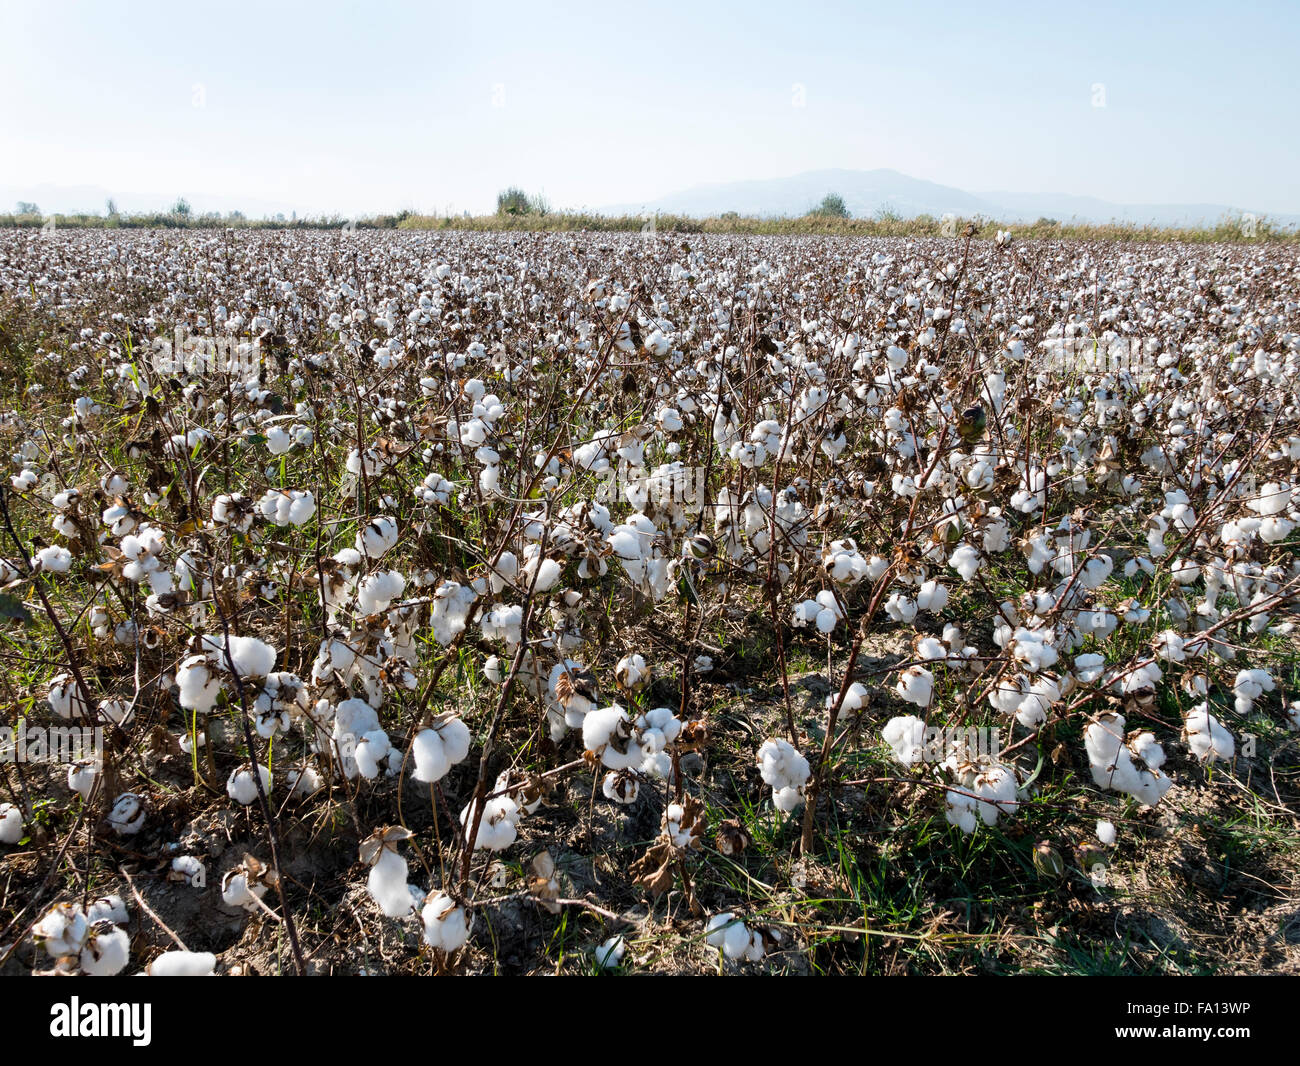 A field of cotton plants (Gossypium) ready for harvesting near Pammukale, Agean region, Turkey. Stock Photo